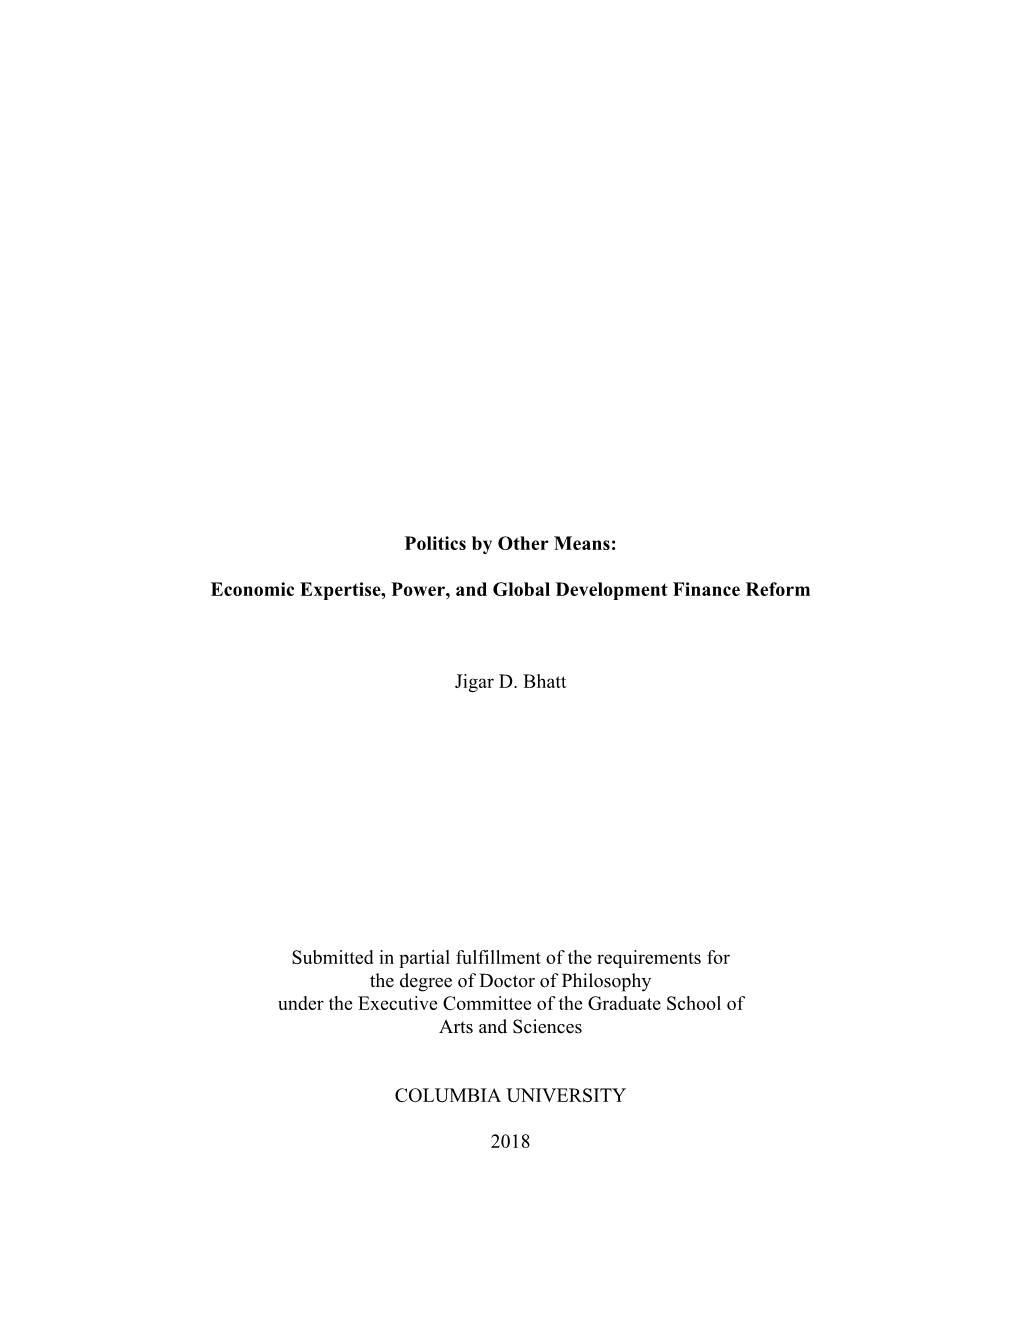 Economic Expertise, Power, and Global Development Finance Reform